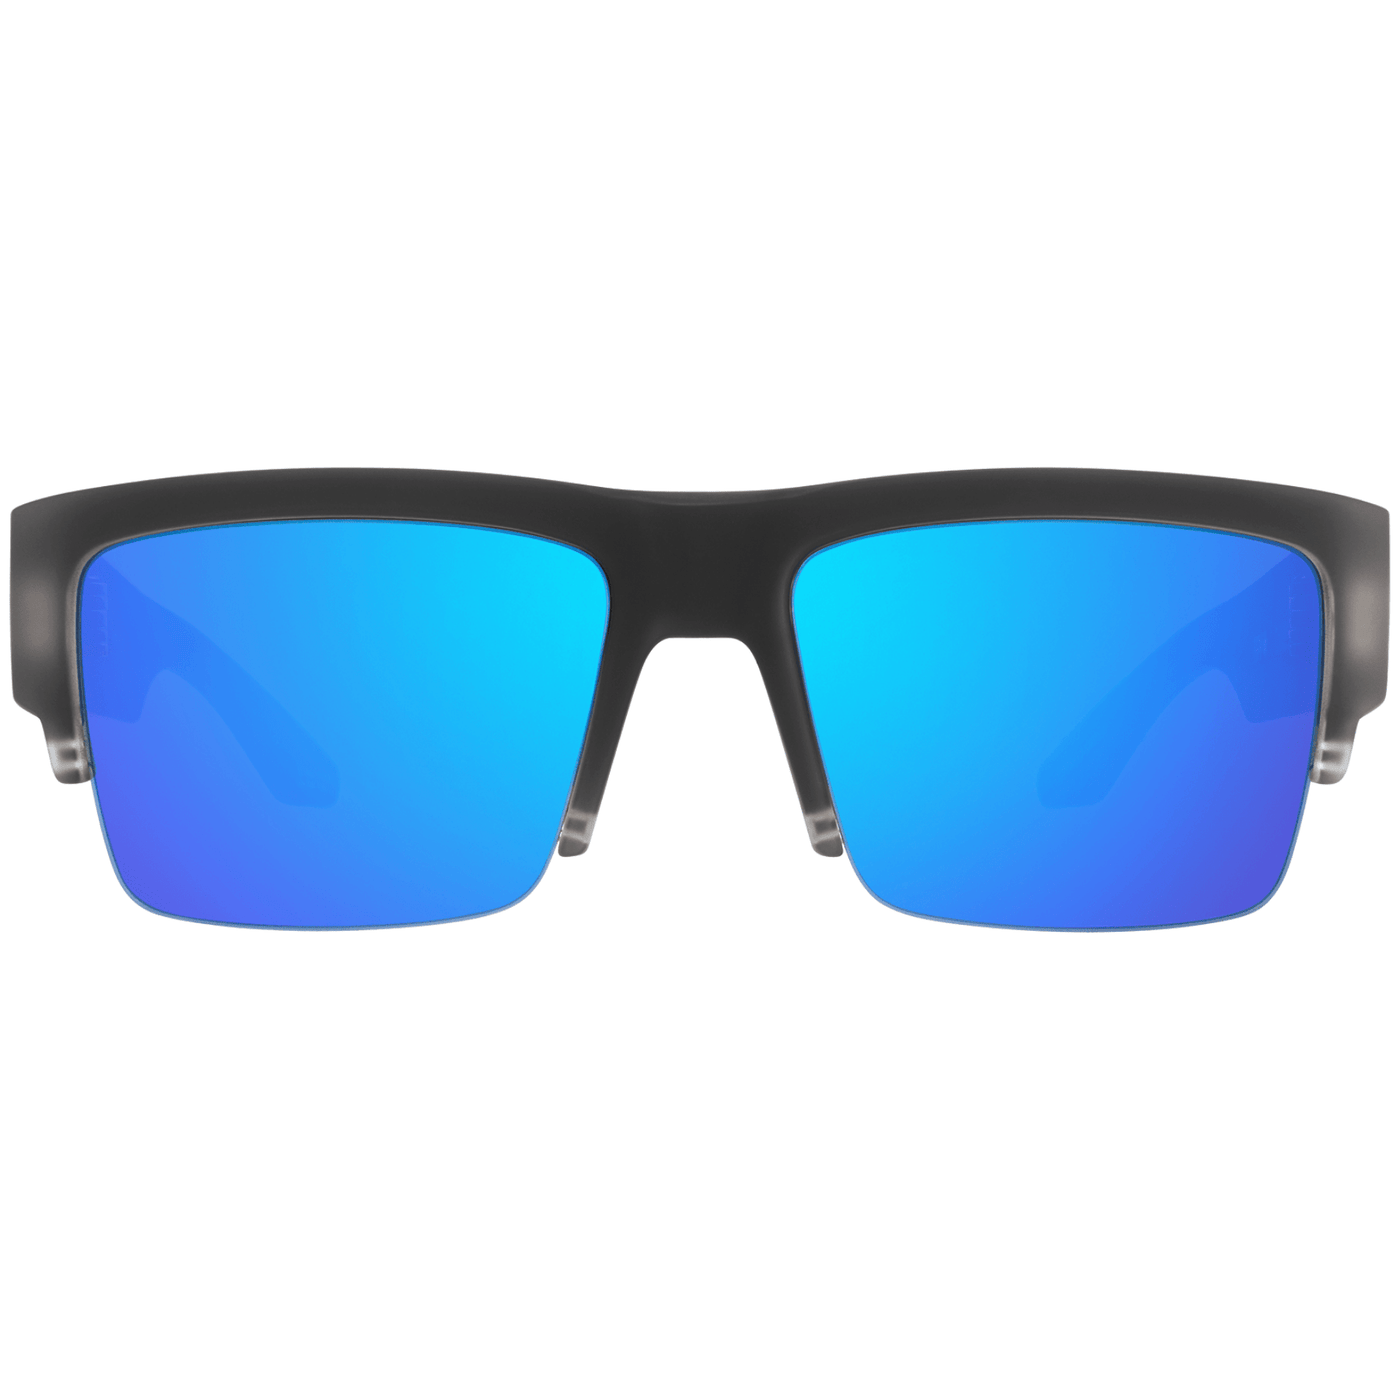 blue semi-rimless sunglasses